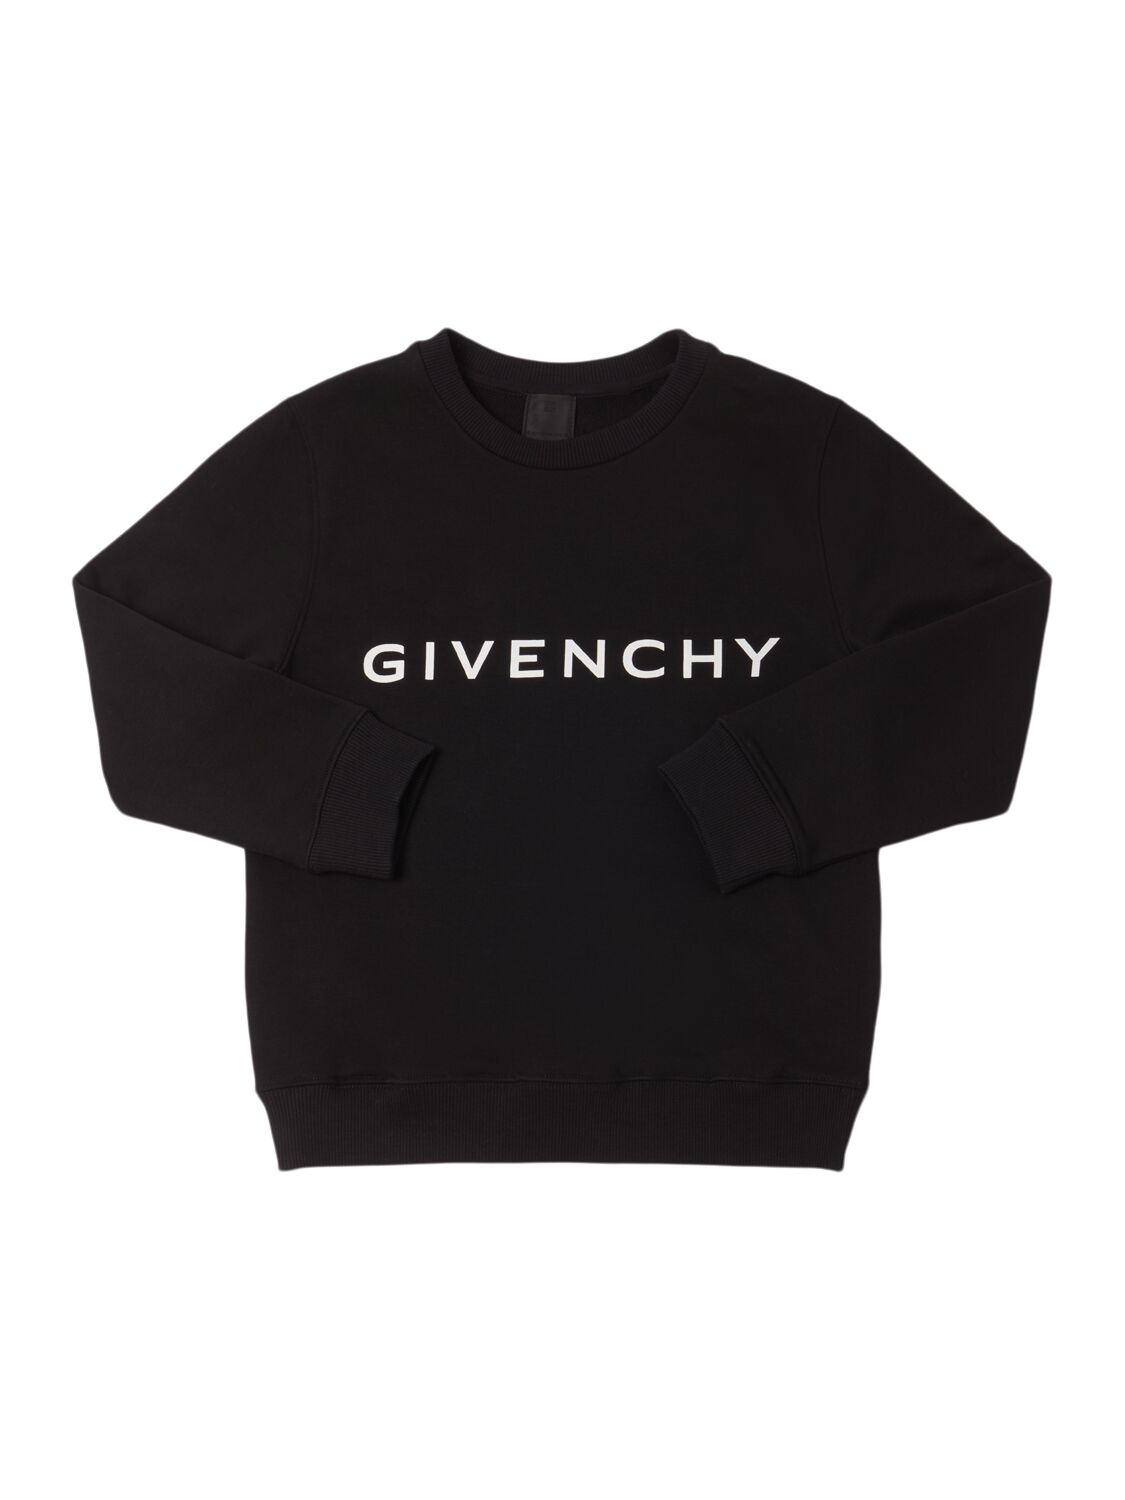 Givenchy Printed Cotton Blend Crewneck Sweatshirt In Black